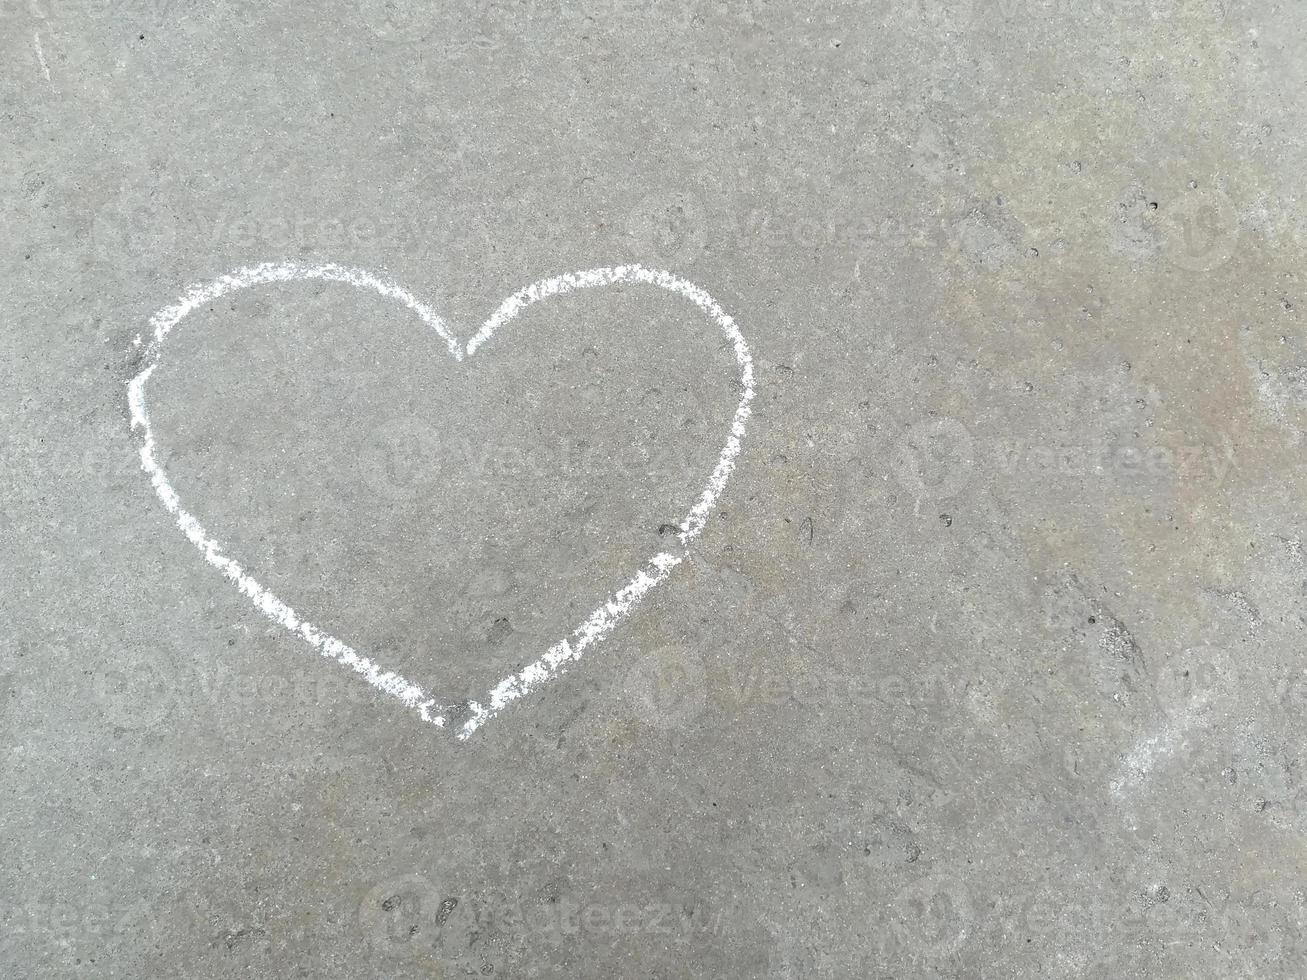 heart - white chalk hand drawing on black asphalt photo